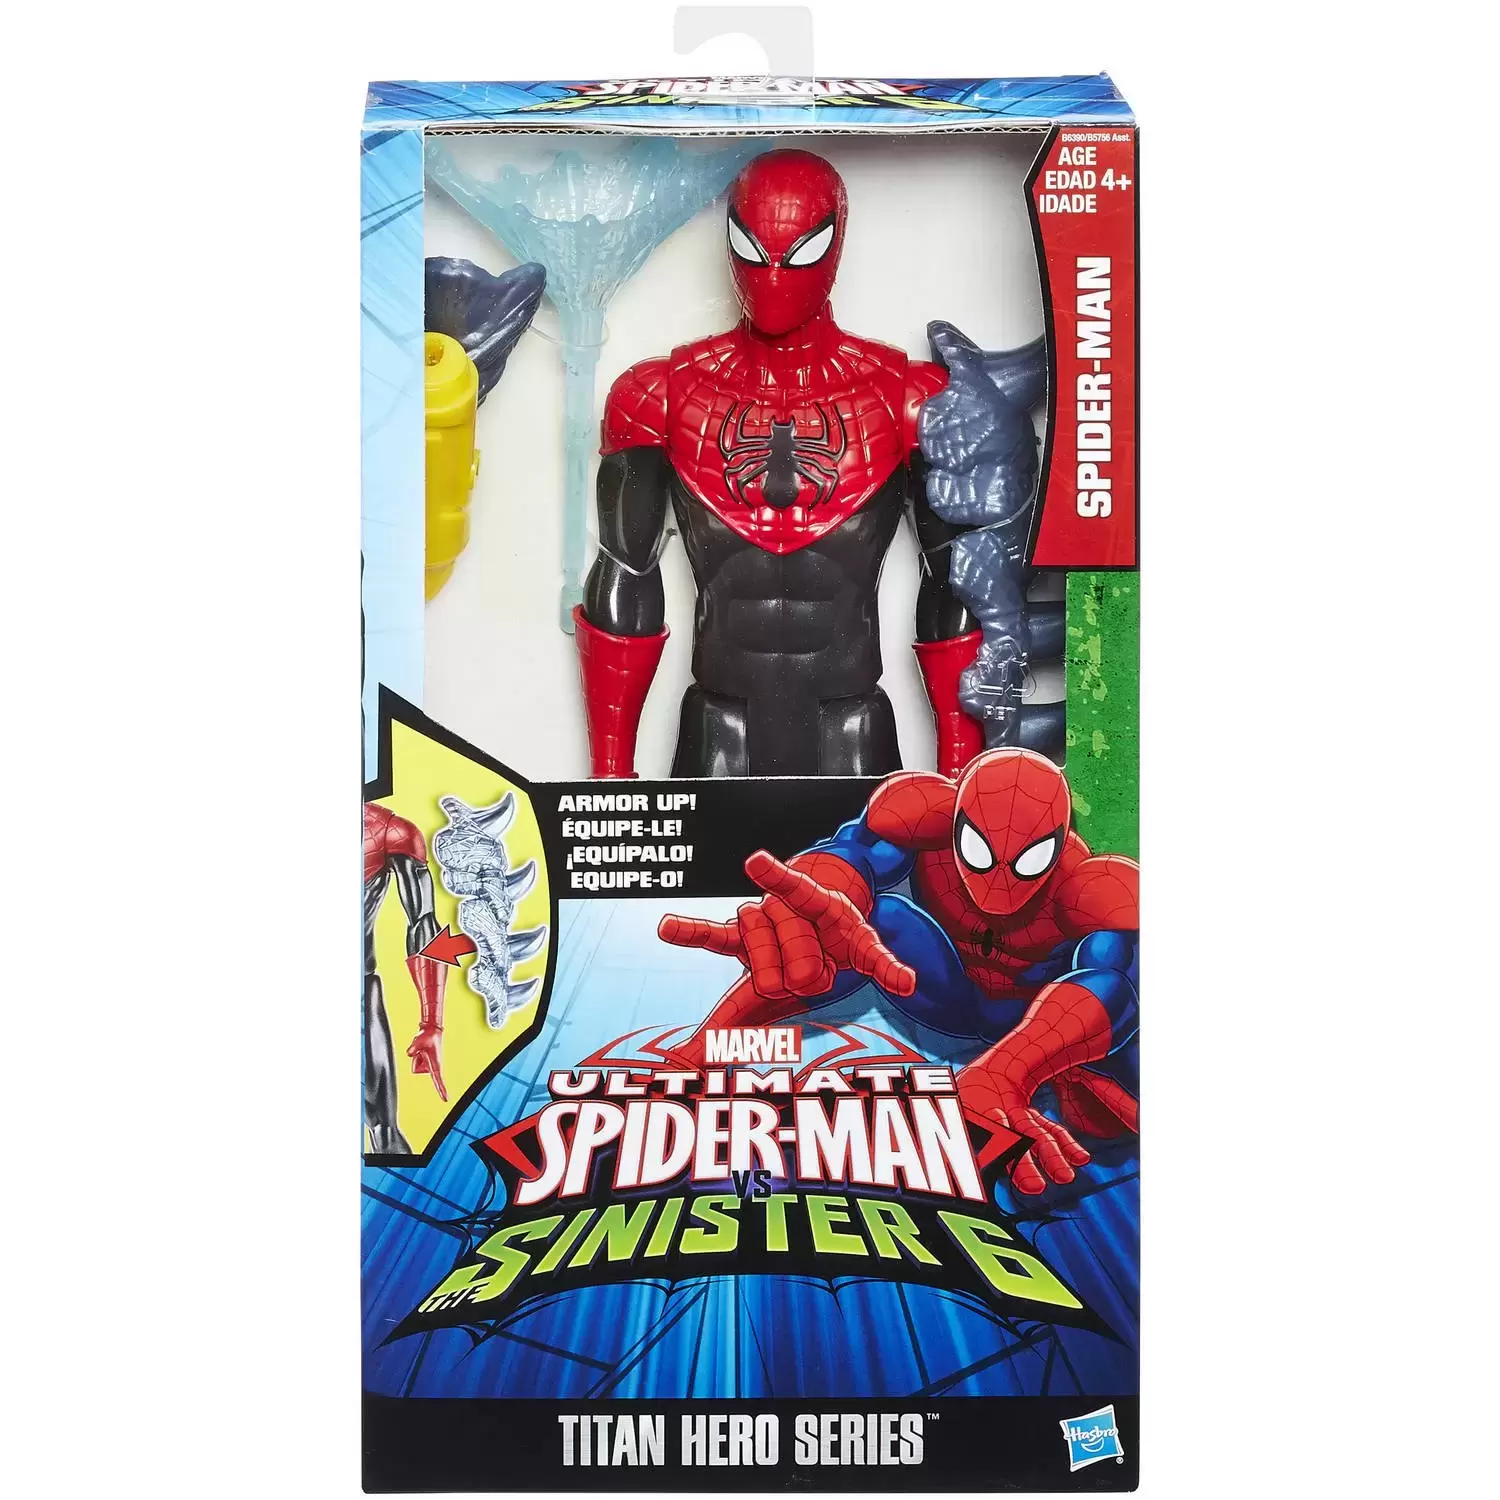 Titan Hero Series - Ultimate Spider-Man Sinister 6 - Spider-Man